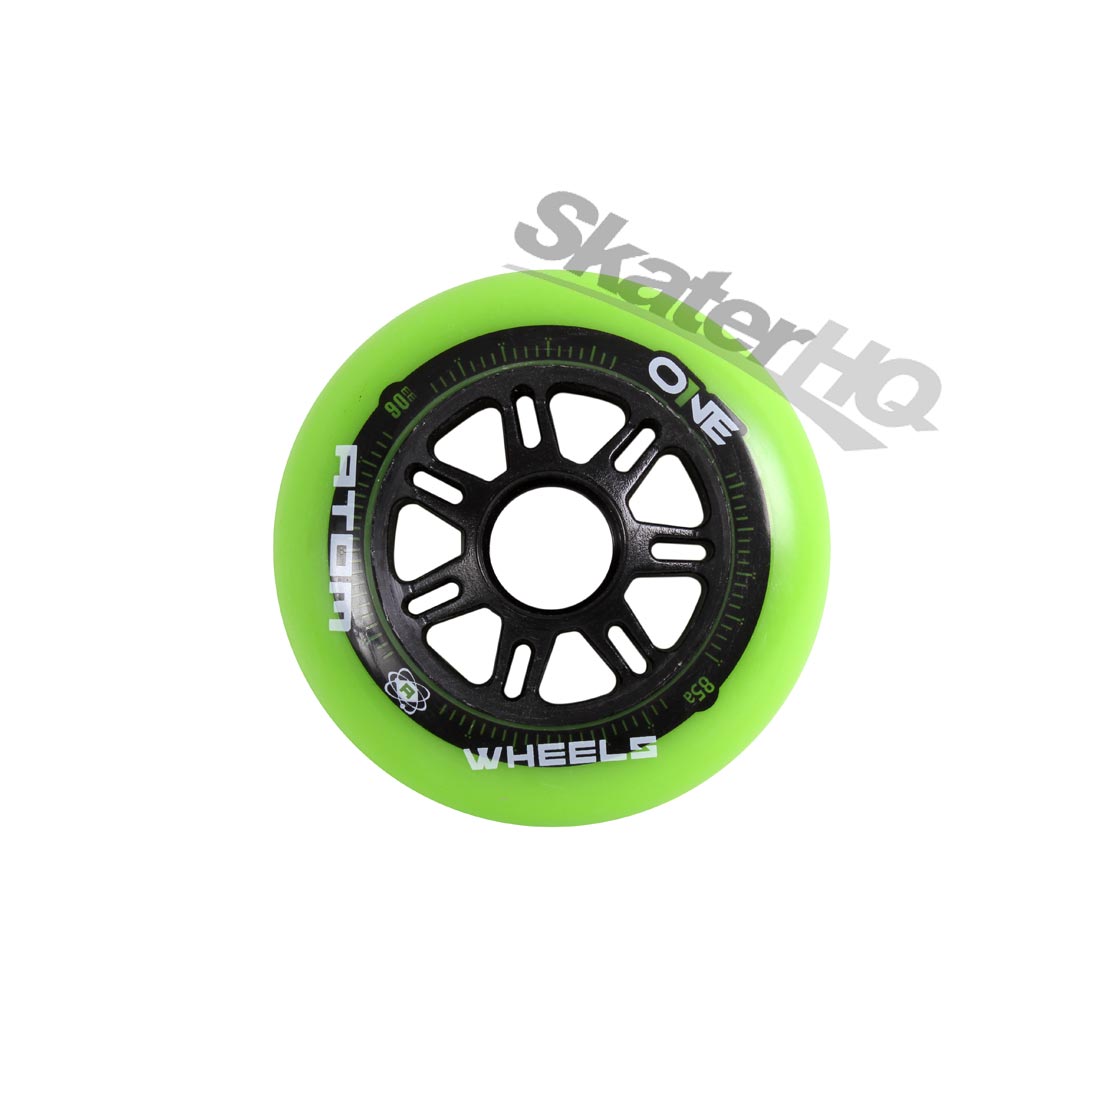 Atom ONE Green / Black 90mm 85 a - Set of 8 Inline Rec Wheels